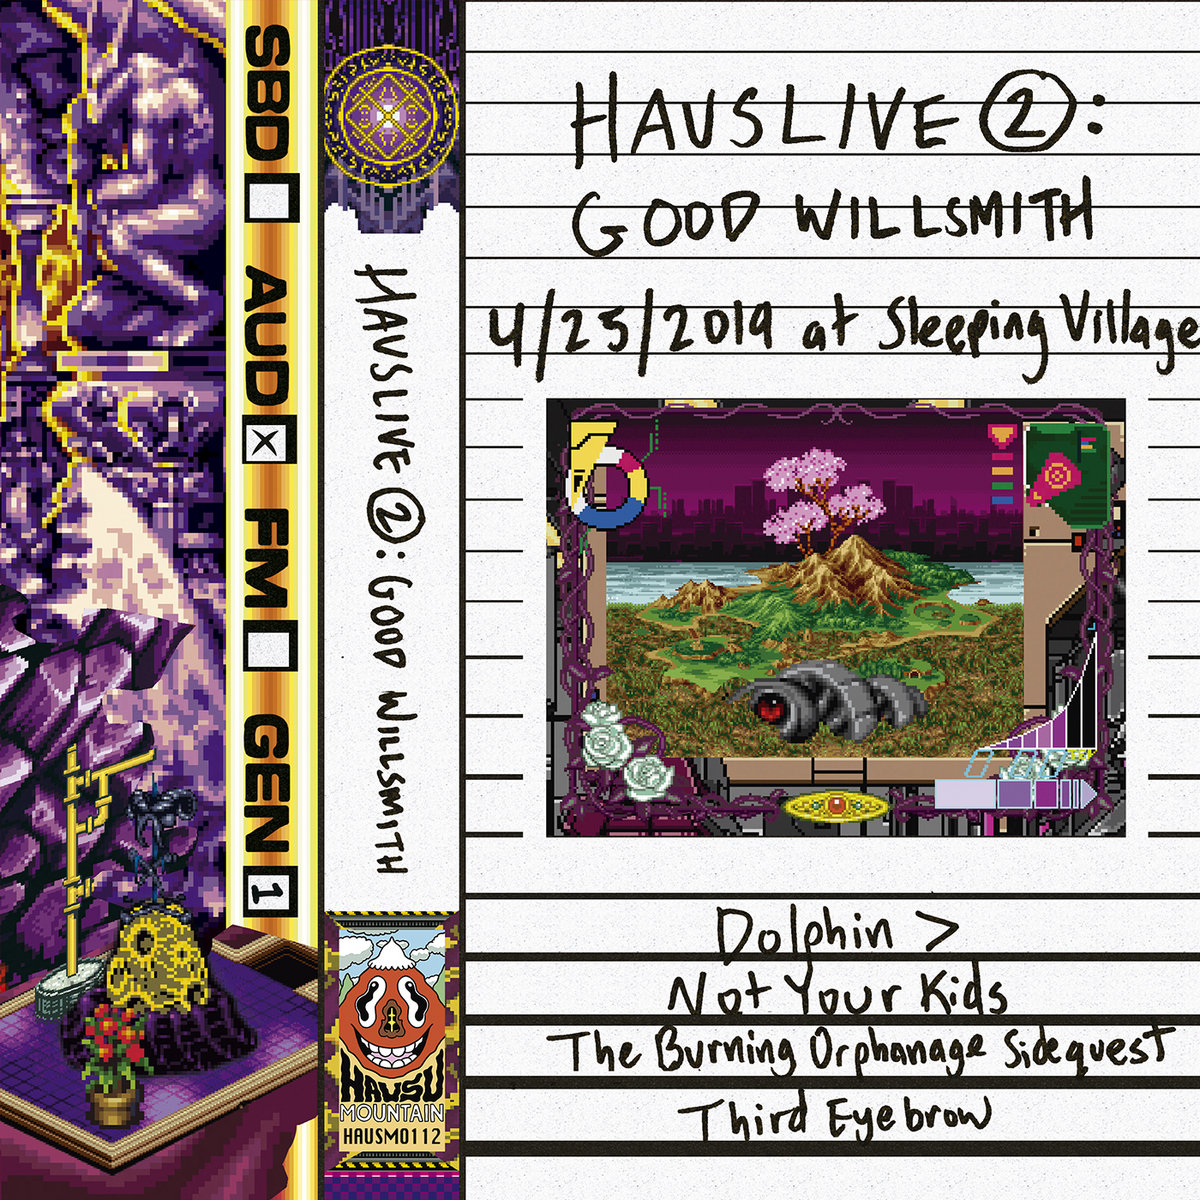 Good Willsmith HausLive 2: Good Willsmith at Sleeping Village, 4/25/2019